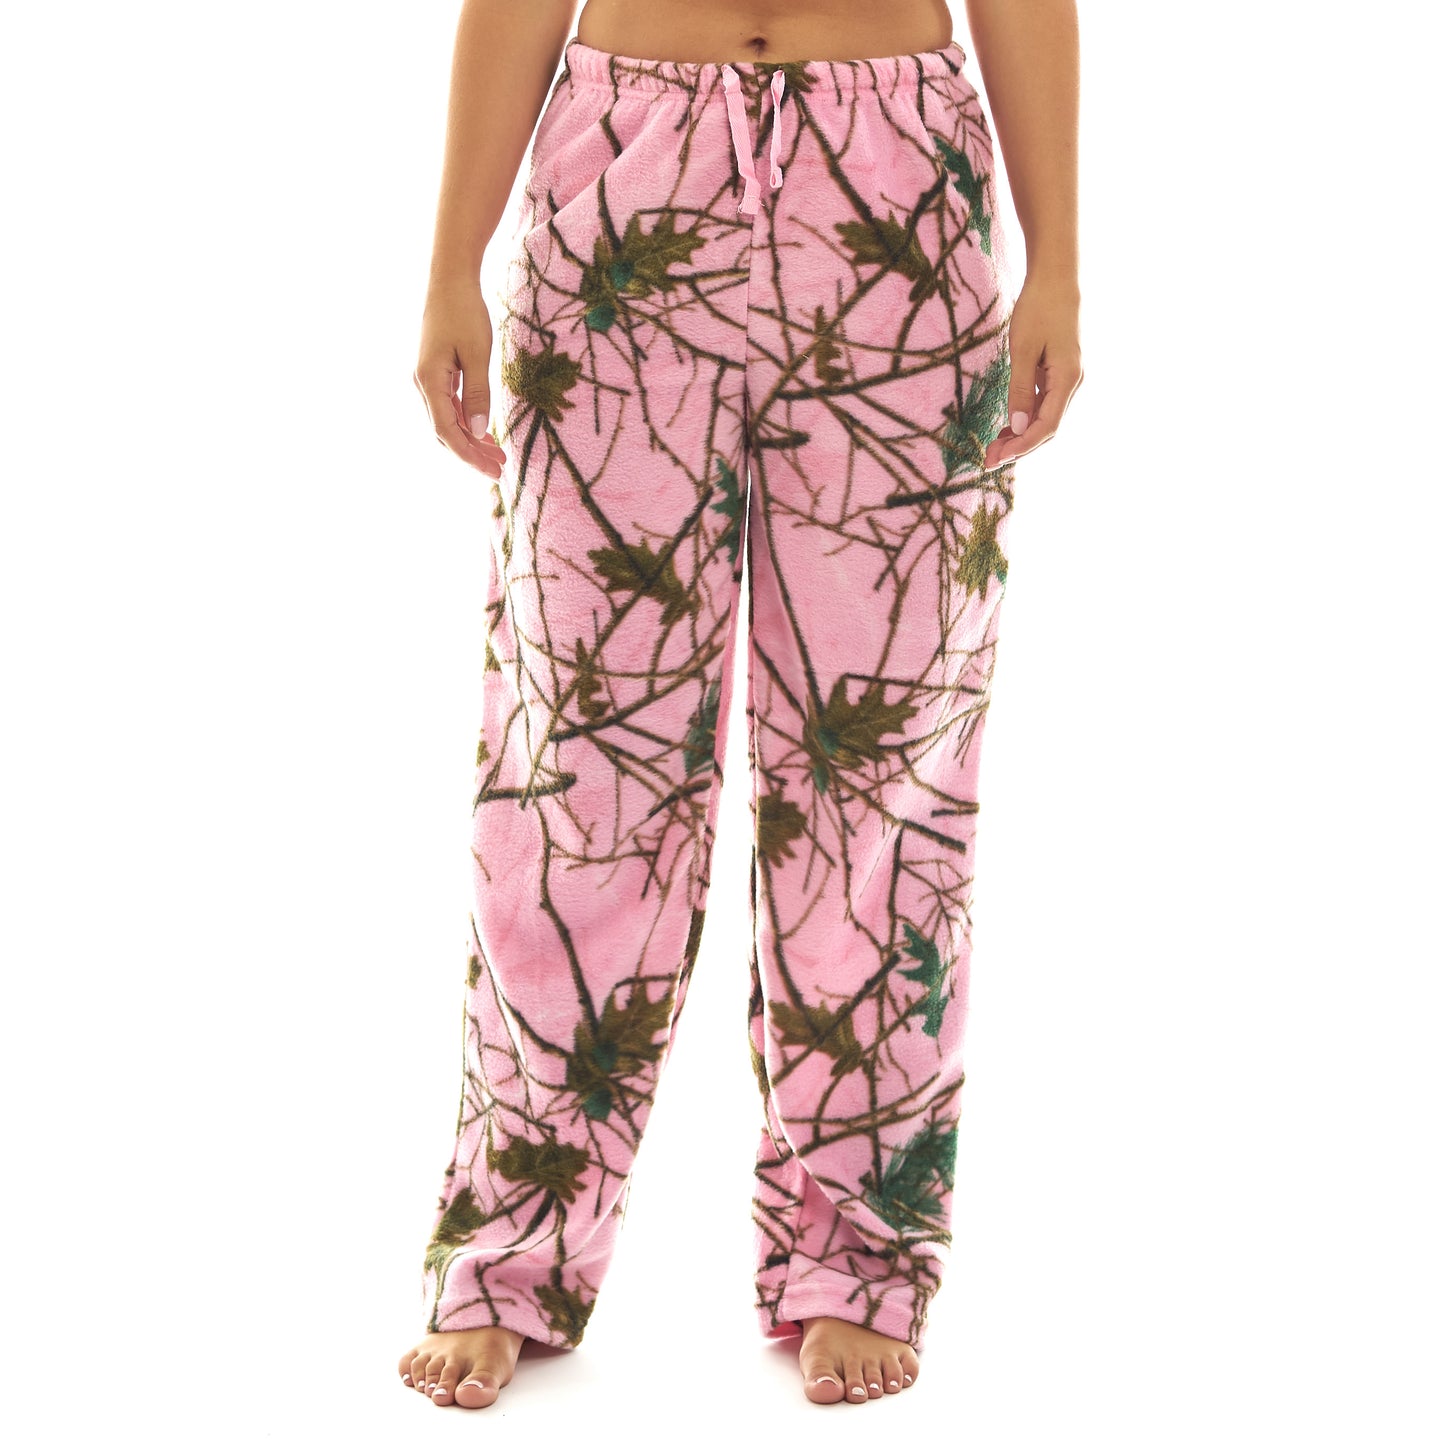 Women's Open Bottom Sleep and Lounge Casual Plush Soft Coral Fleece Camo Pajama Pants